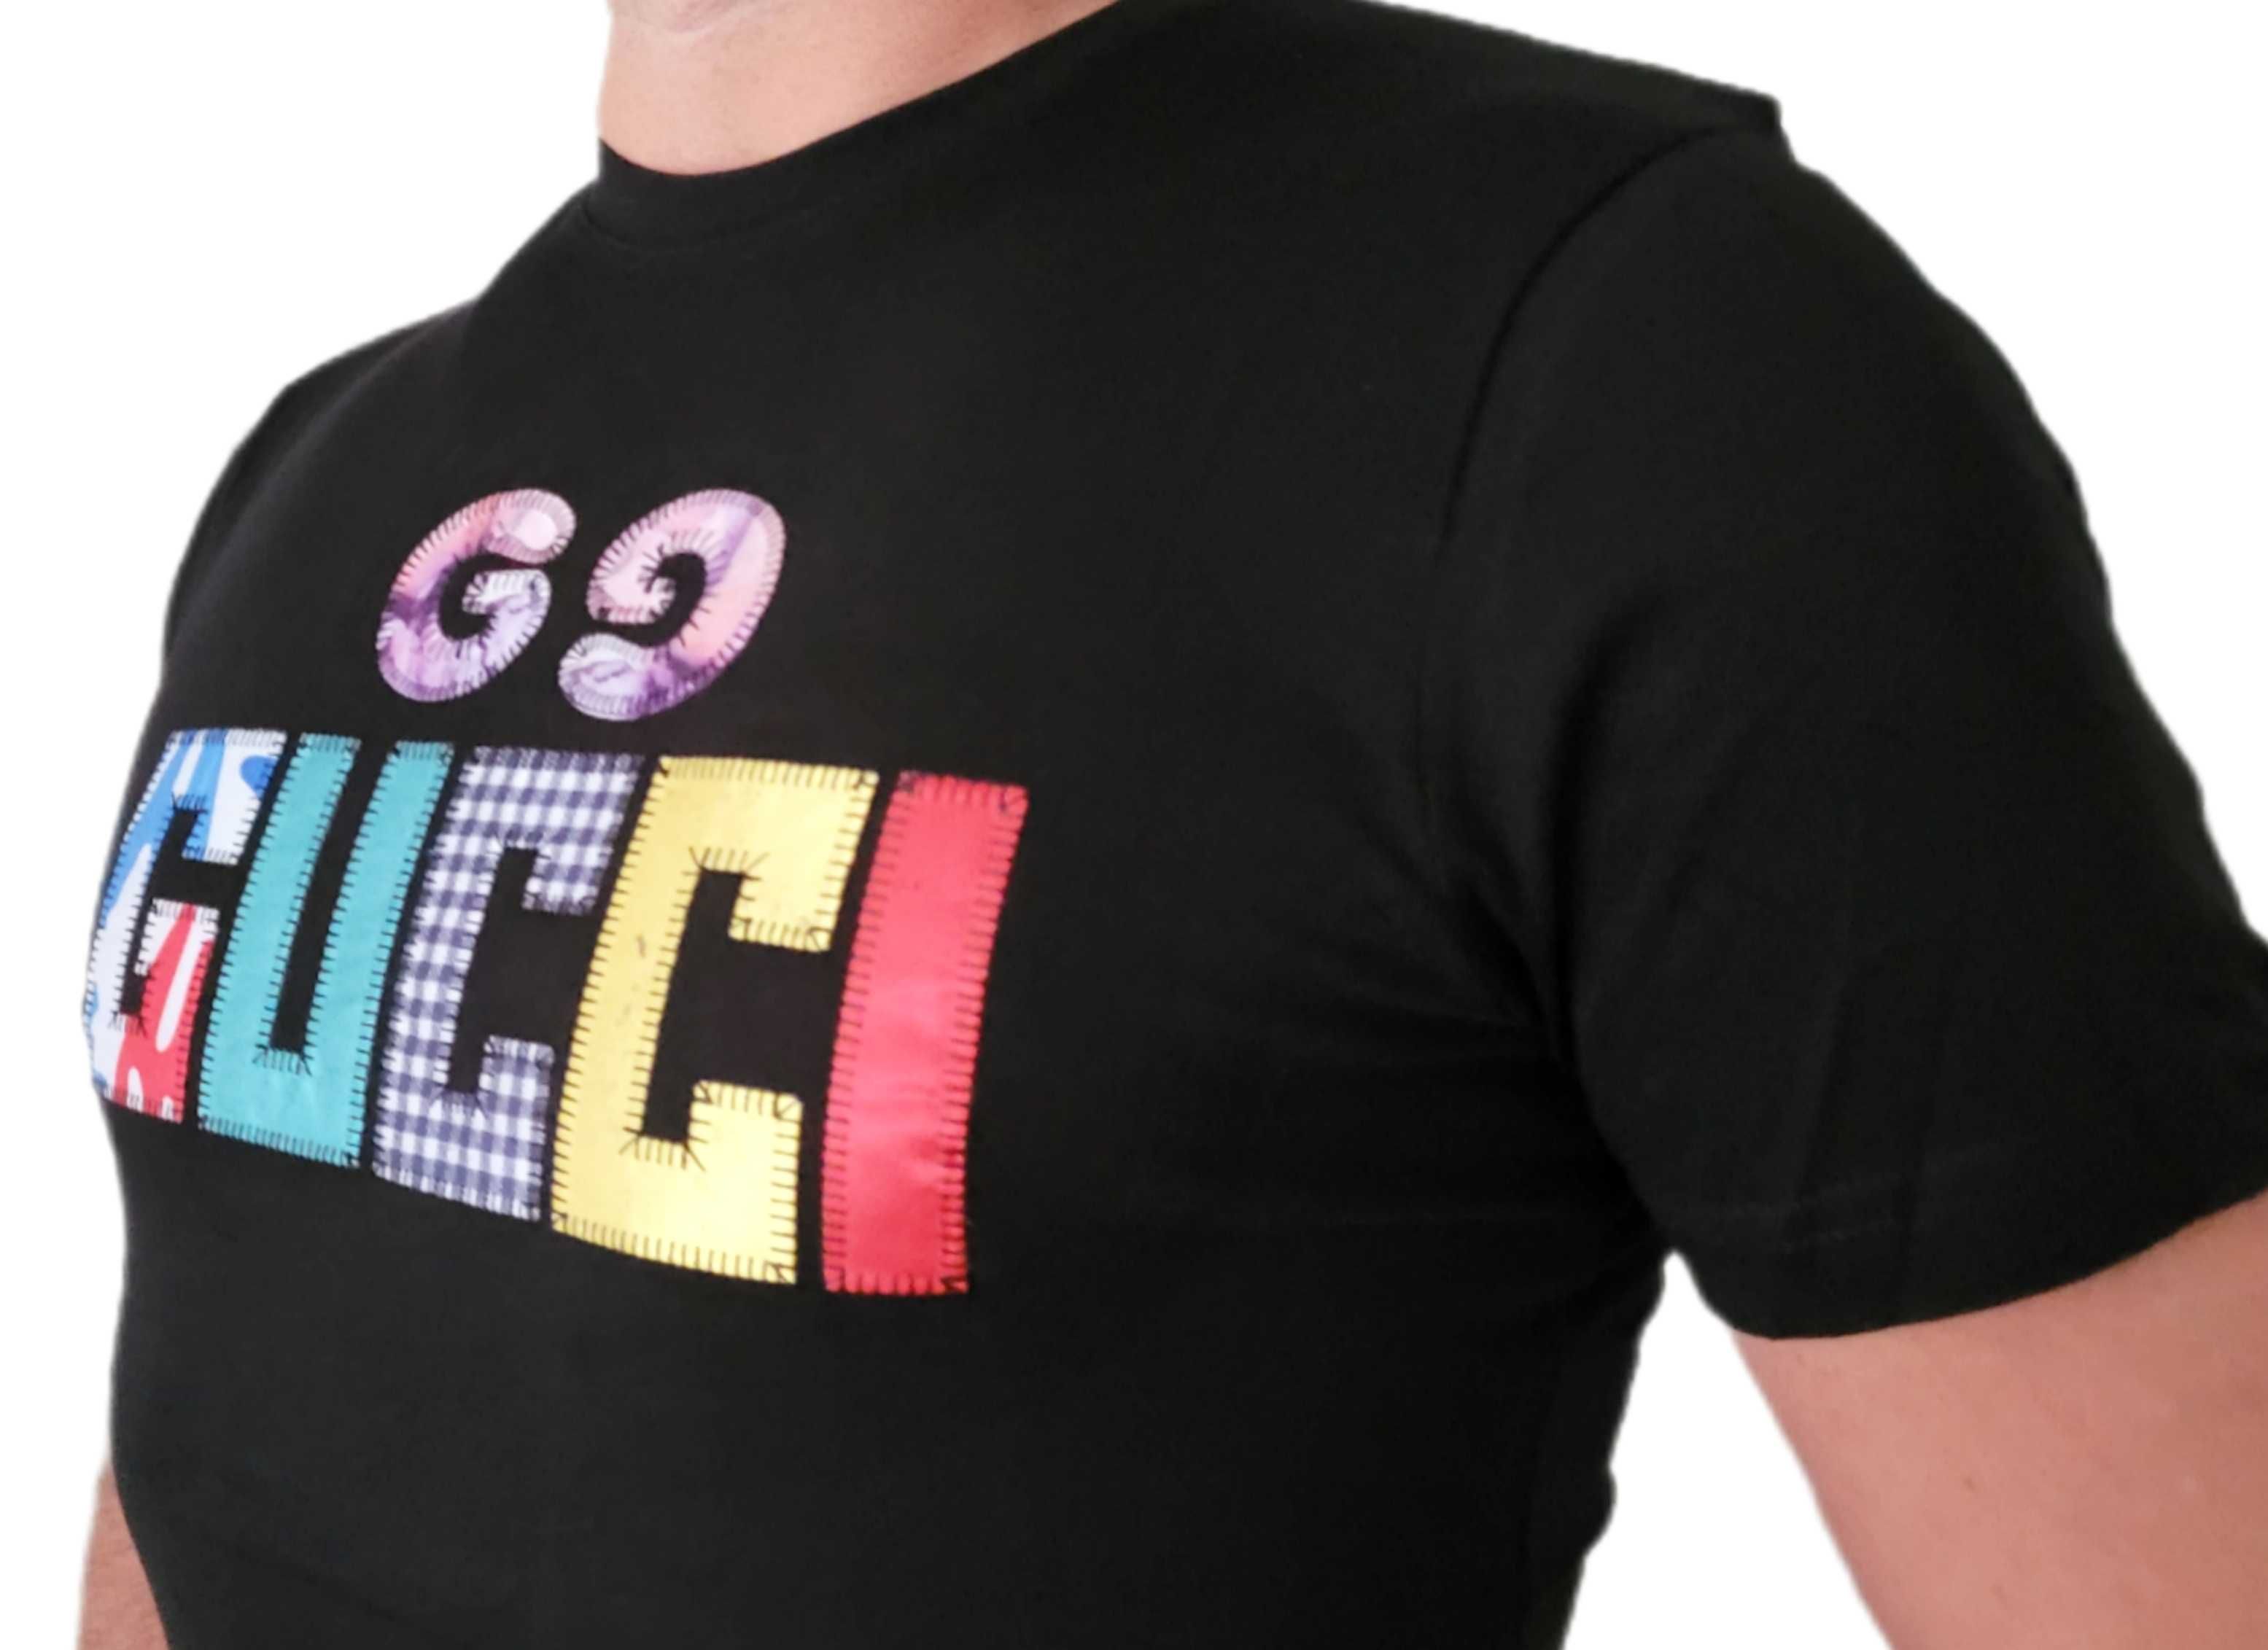 koszulka męska t-shirt Gucci czarny Wyprzedaż